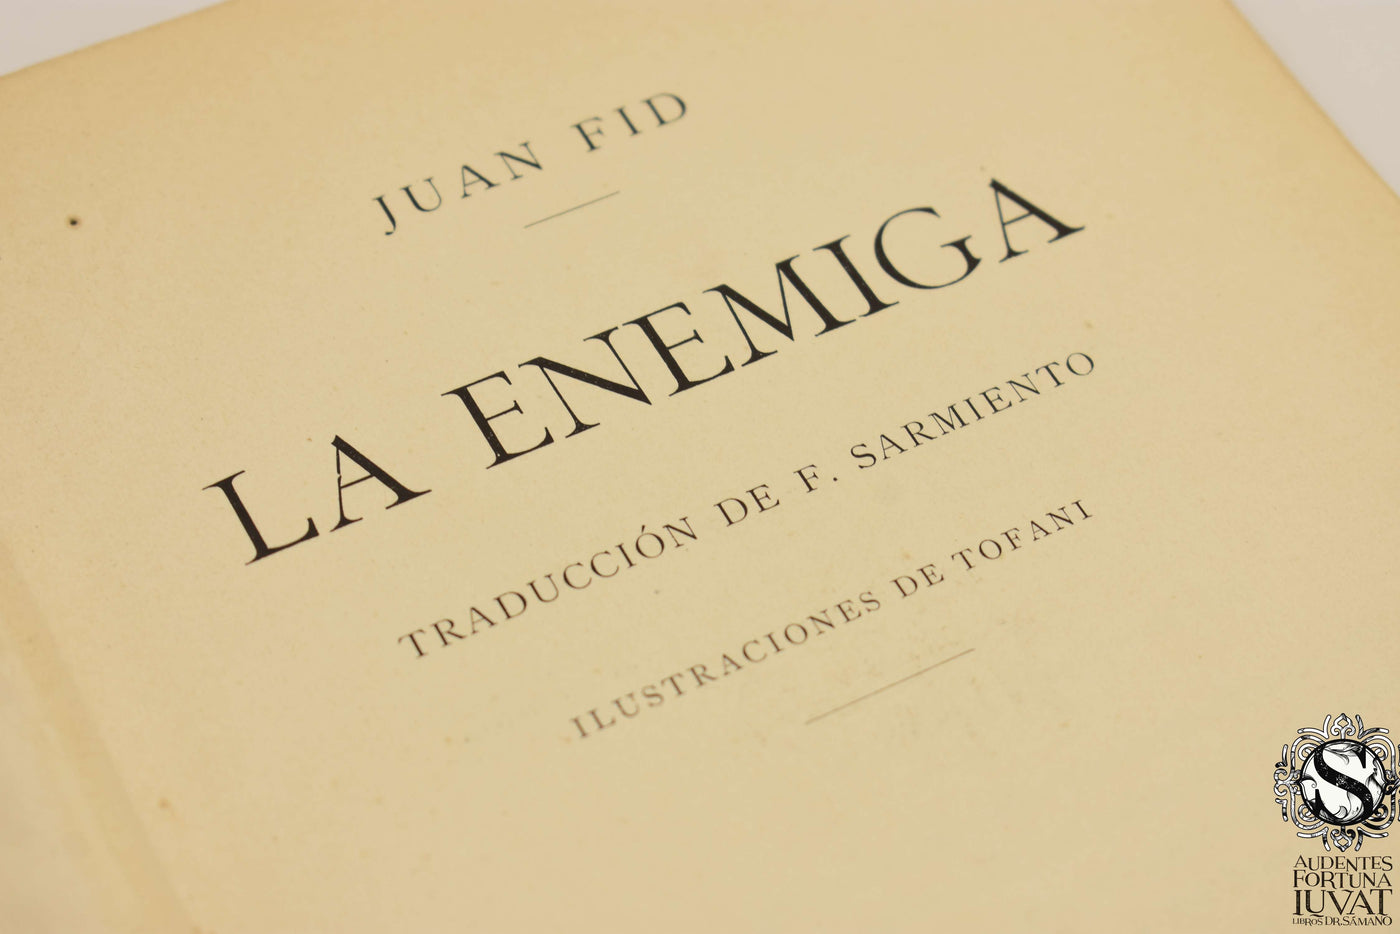 LA ENEMIGA - Juan Fid